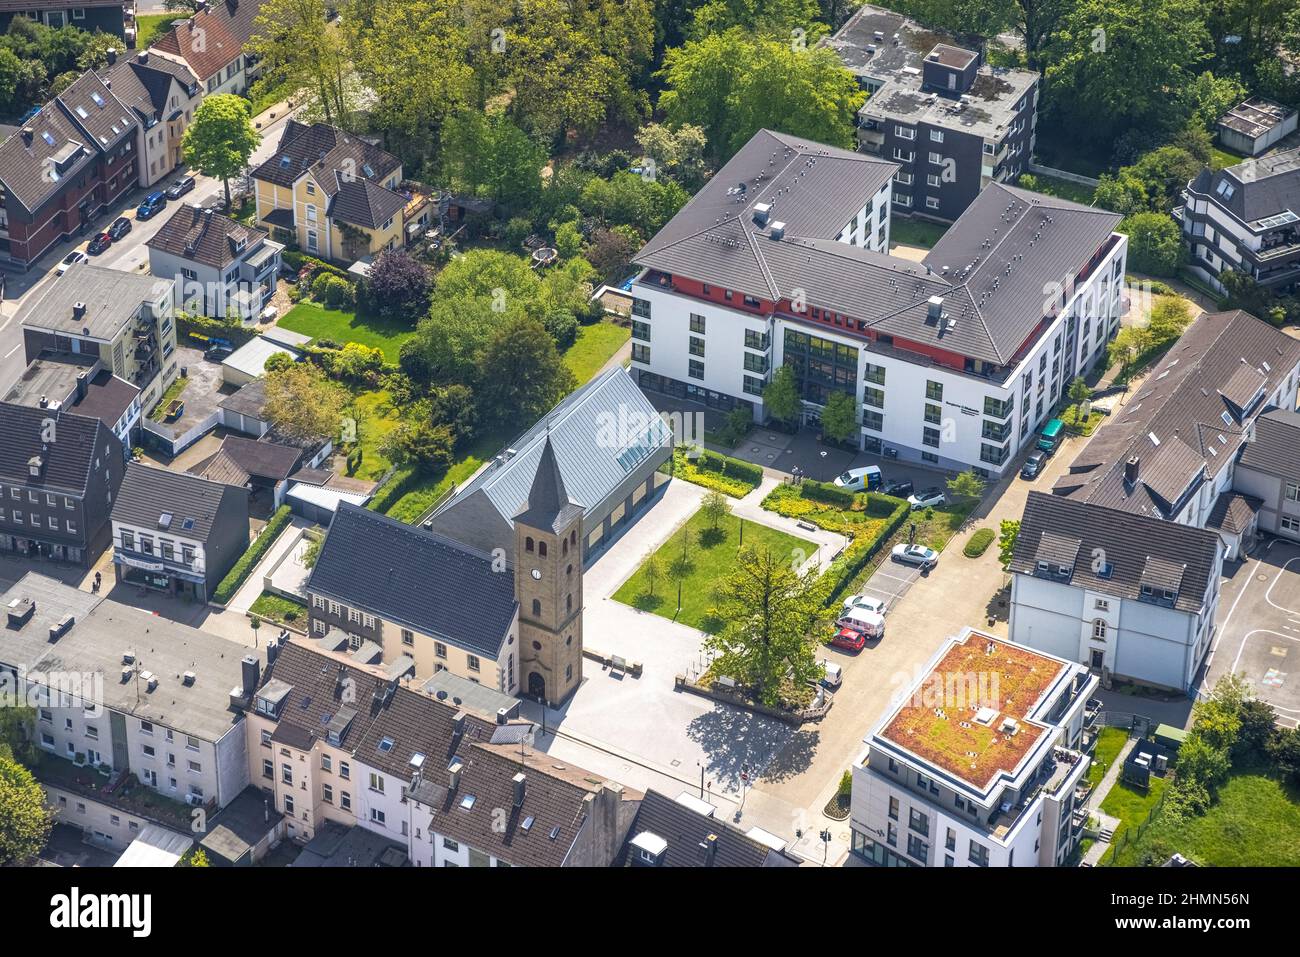 Vista aerea, Seniorenpark Diakoniezentrum Heiligenhaus und evang. Vecchia chiesa, Leubeck, Heiligenhaus, zona della Ruhr, Renania settentrionale-Vestfalia, Germania, vecchia p Foto Stock